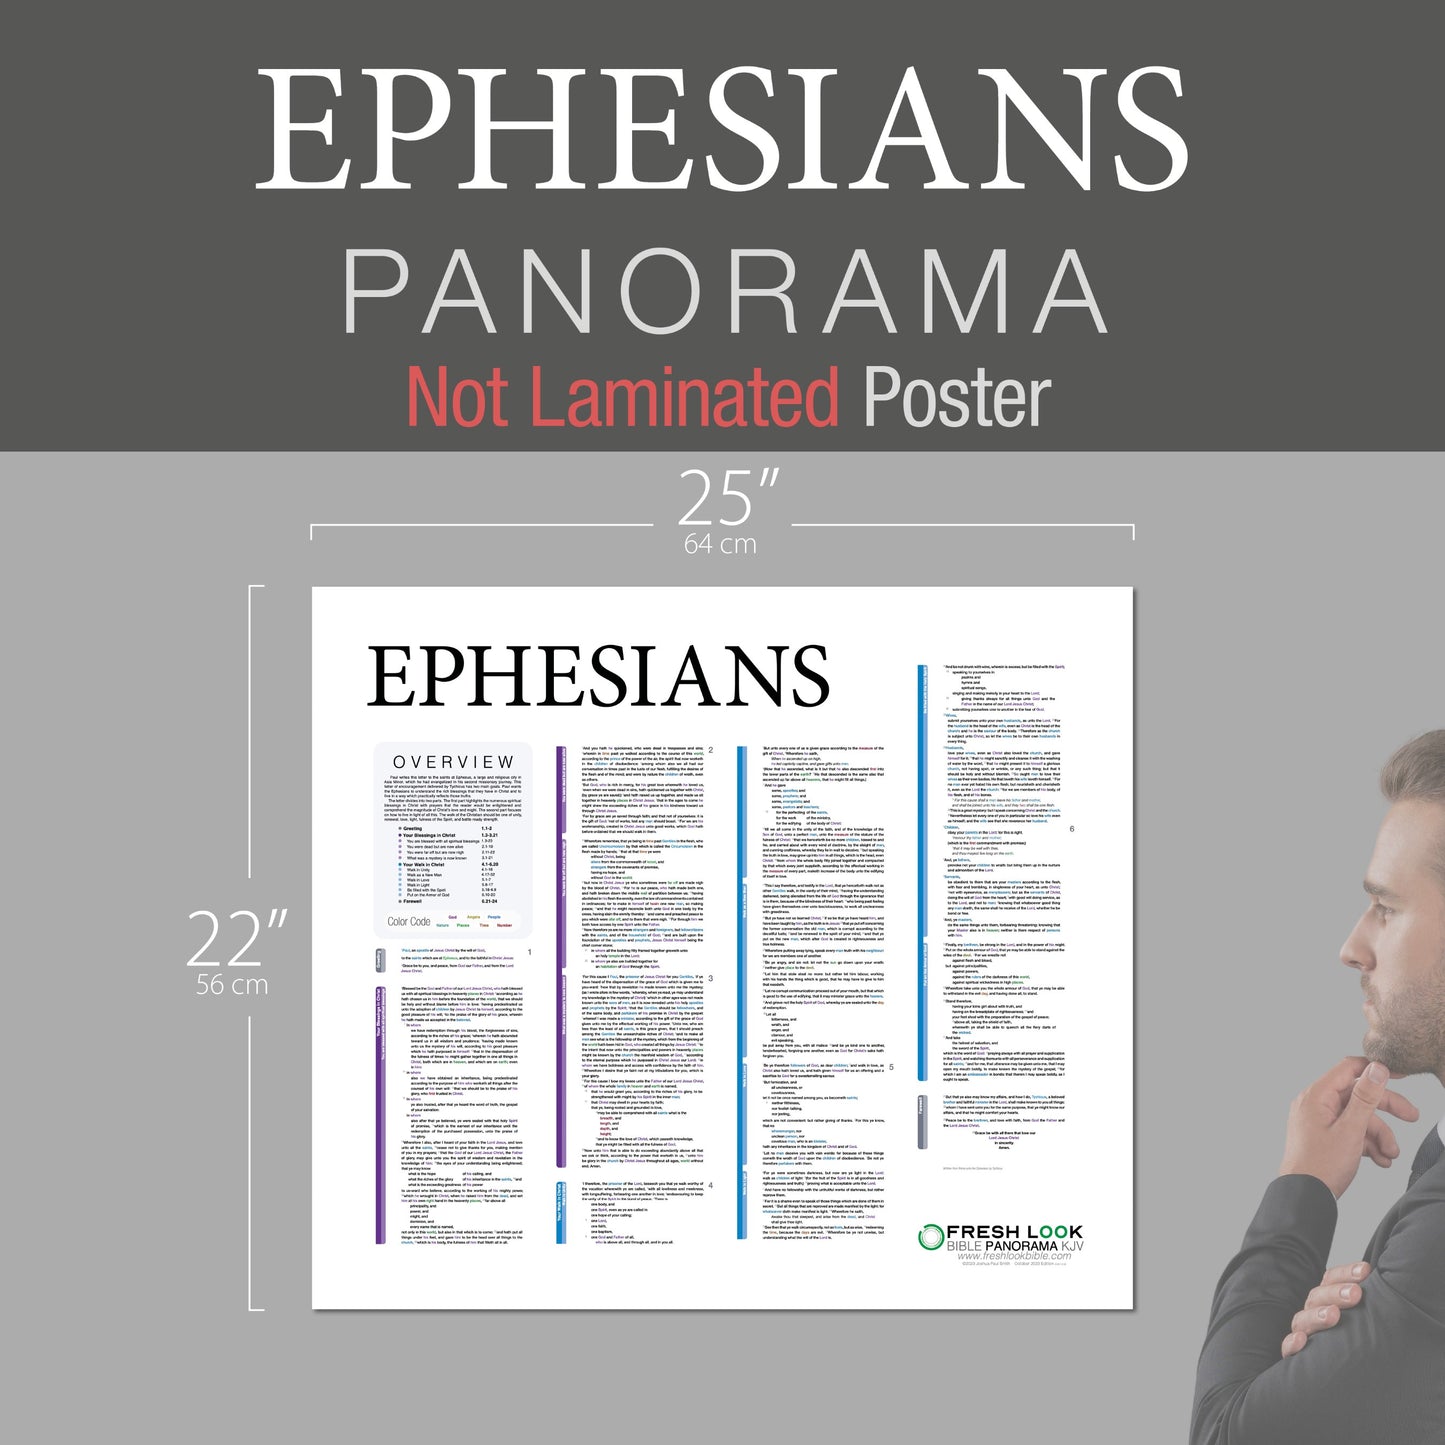 Ephesians Panorama Not Laminated